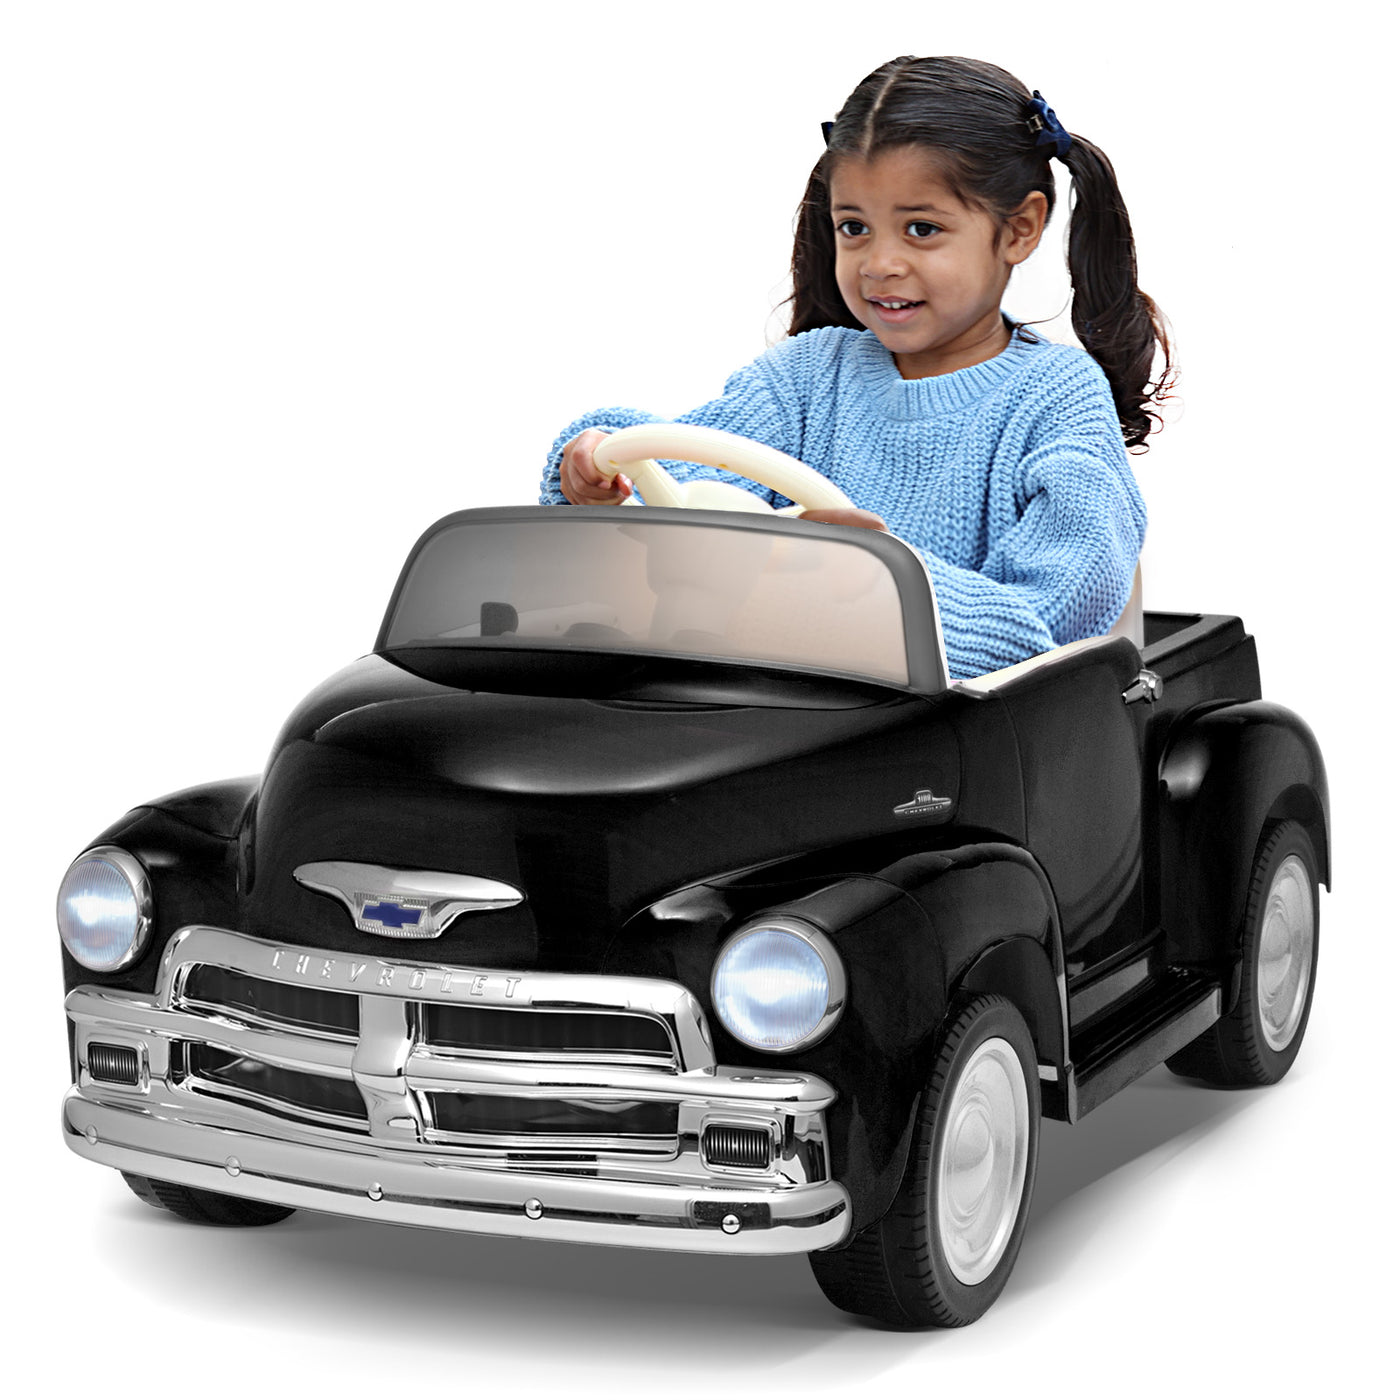 Joywhale 12V Kids Ride on Car Licensed Chevrolet 3100 Pickup , with 7AH Big Battery, 2.4G Remote Control, 3-Speeds, DP-CH01L